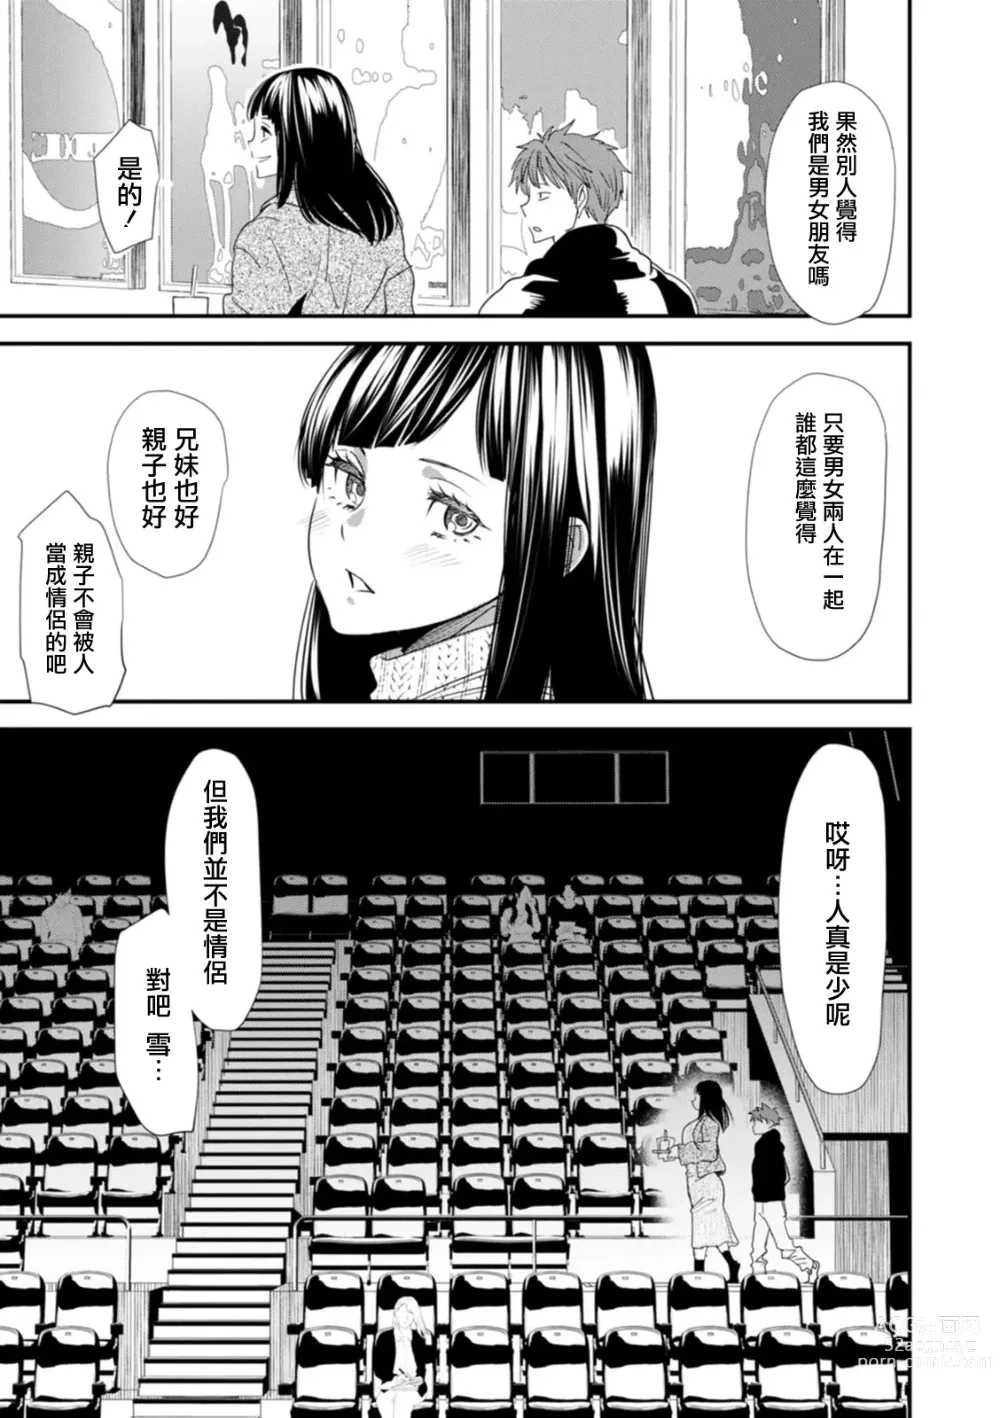 Page 5 of manga 淫魔女子大生の憂鬱 第5話 雪的告白